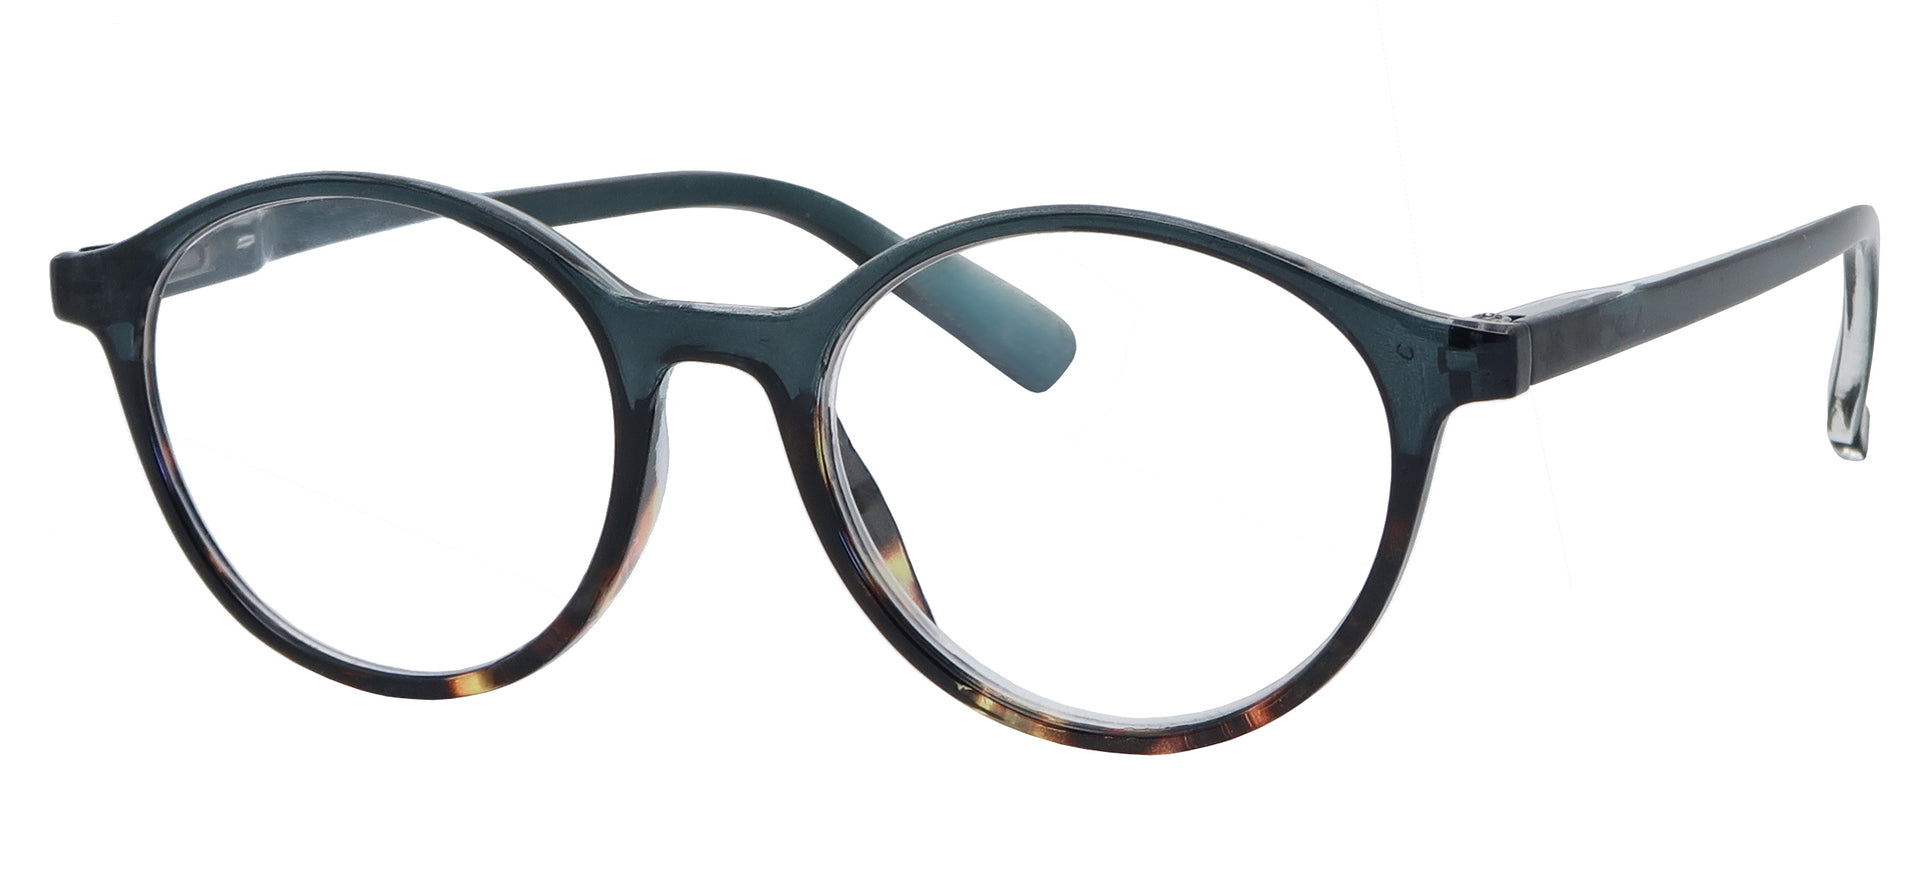 ST1504R -  Wholesale Unisex Basic Oval Style Reading Glasses in Tortoise